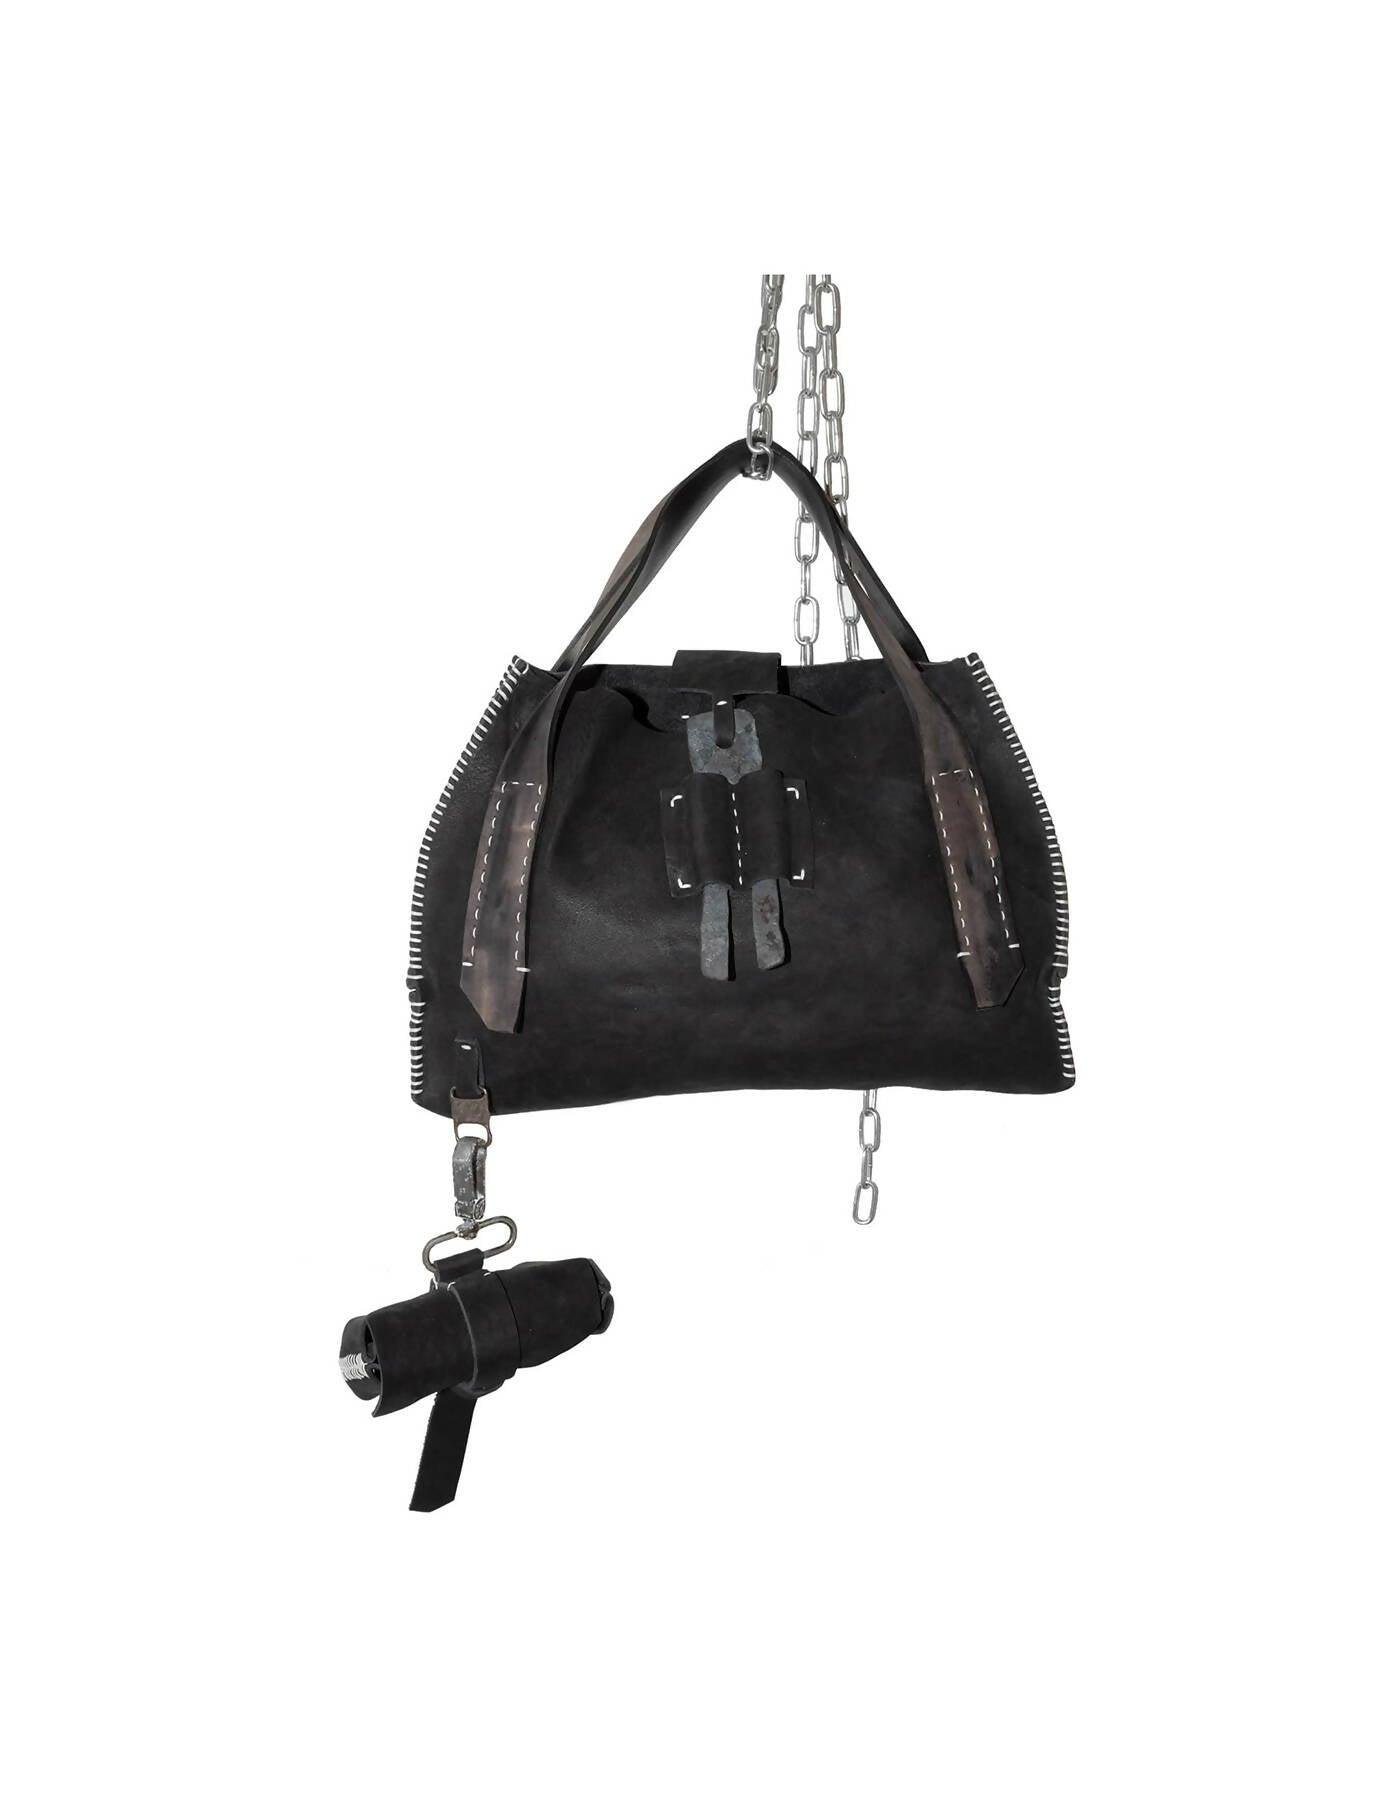 Black Utility Handbag by ATELIER SKN